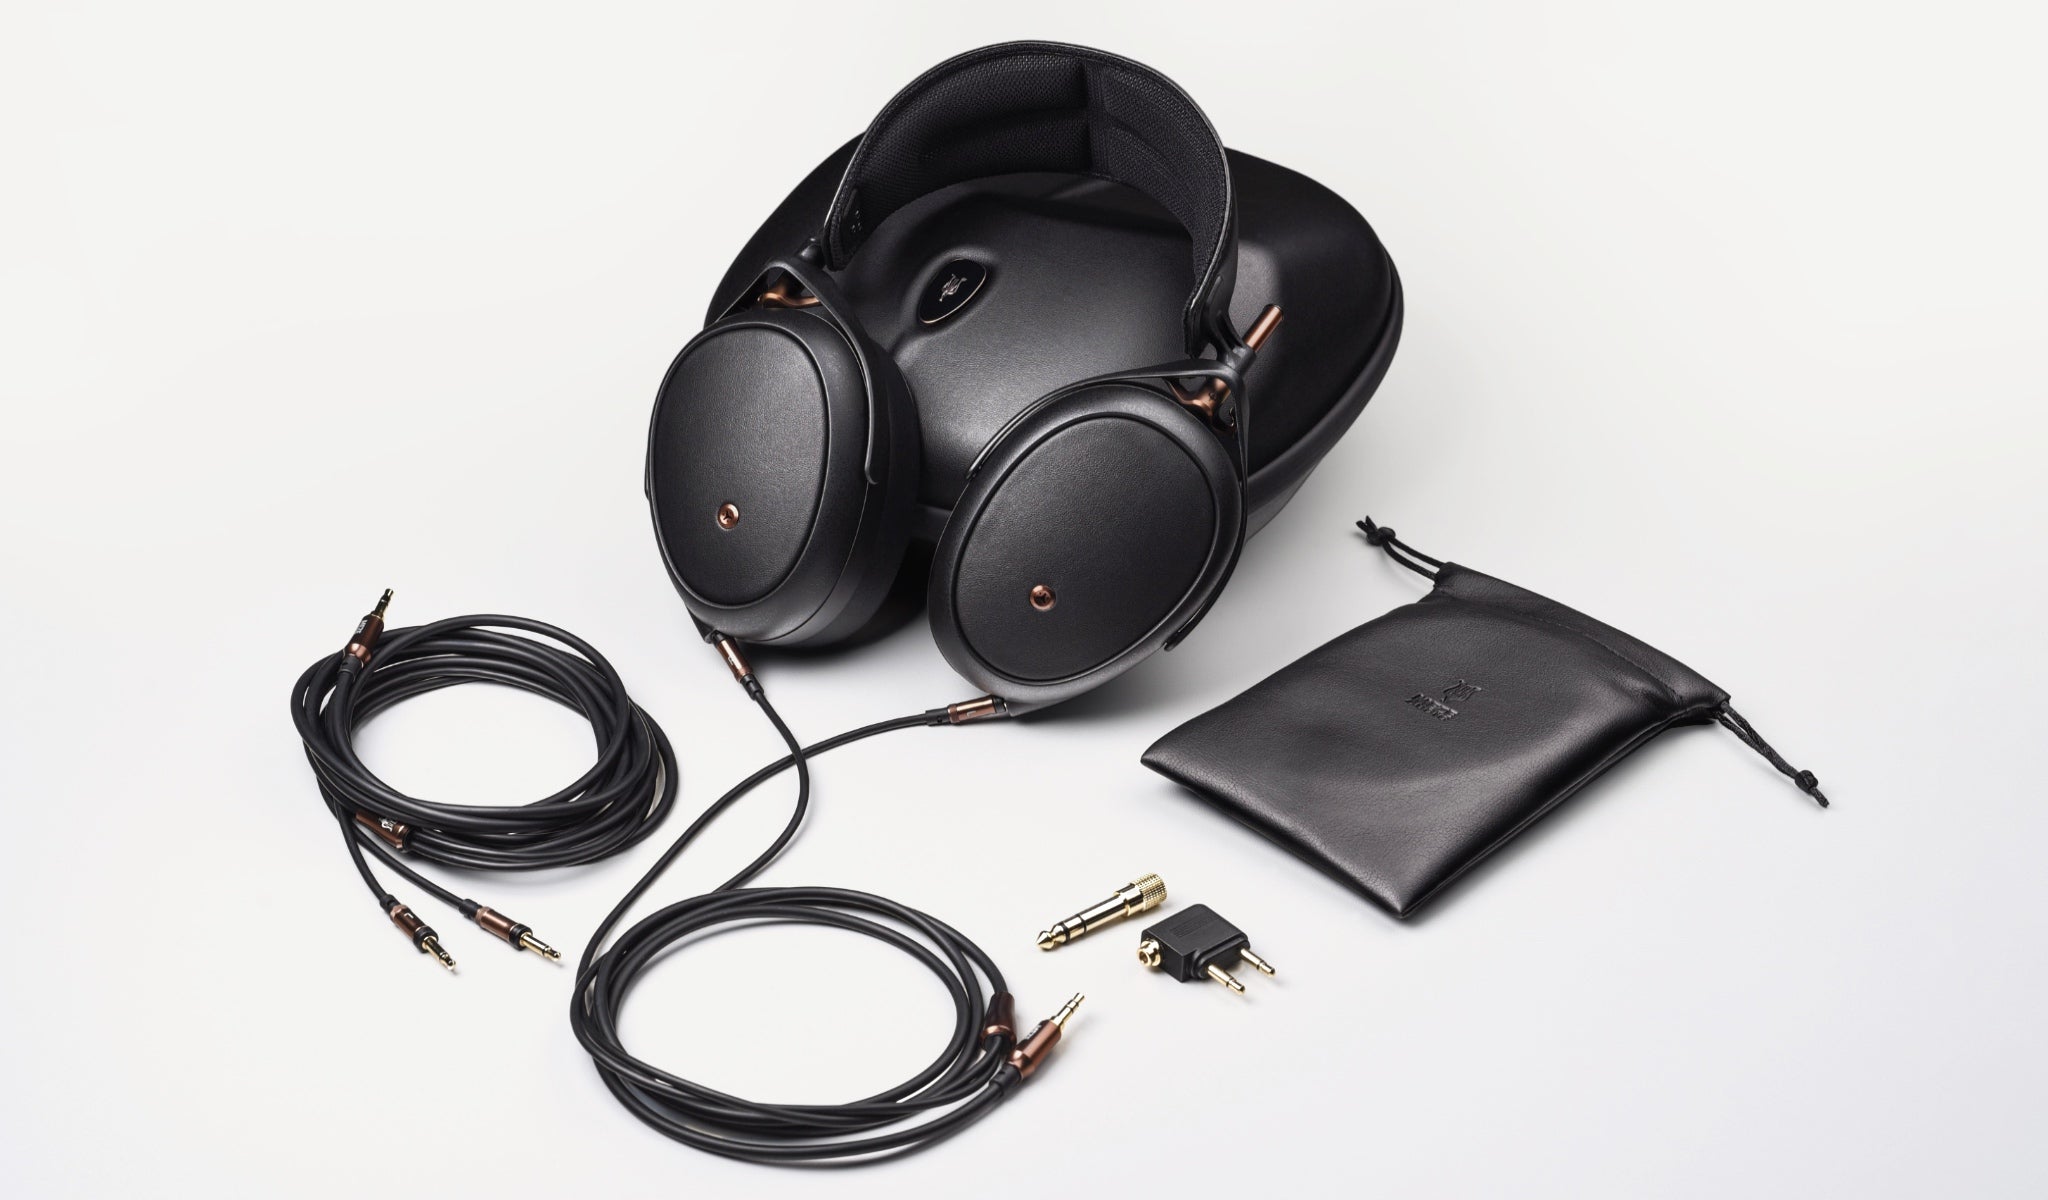 Meze Audio Liric headphone and accessories